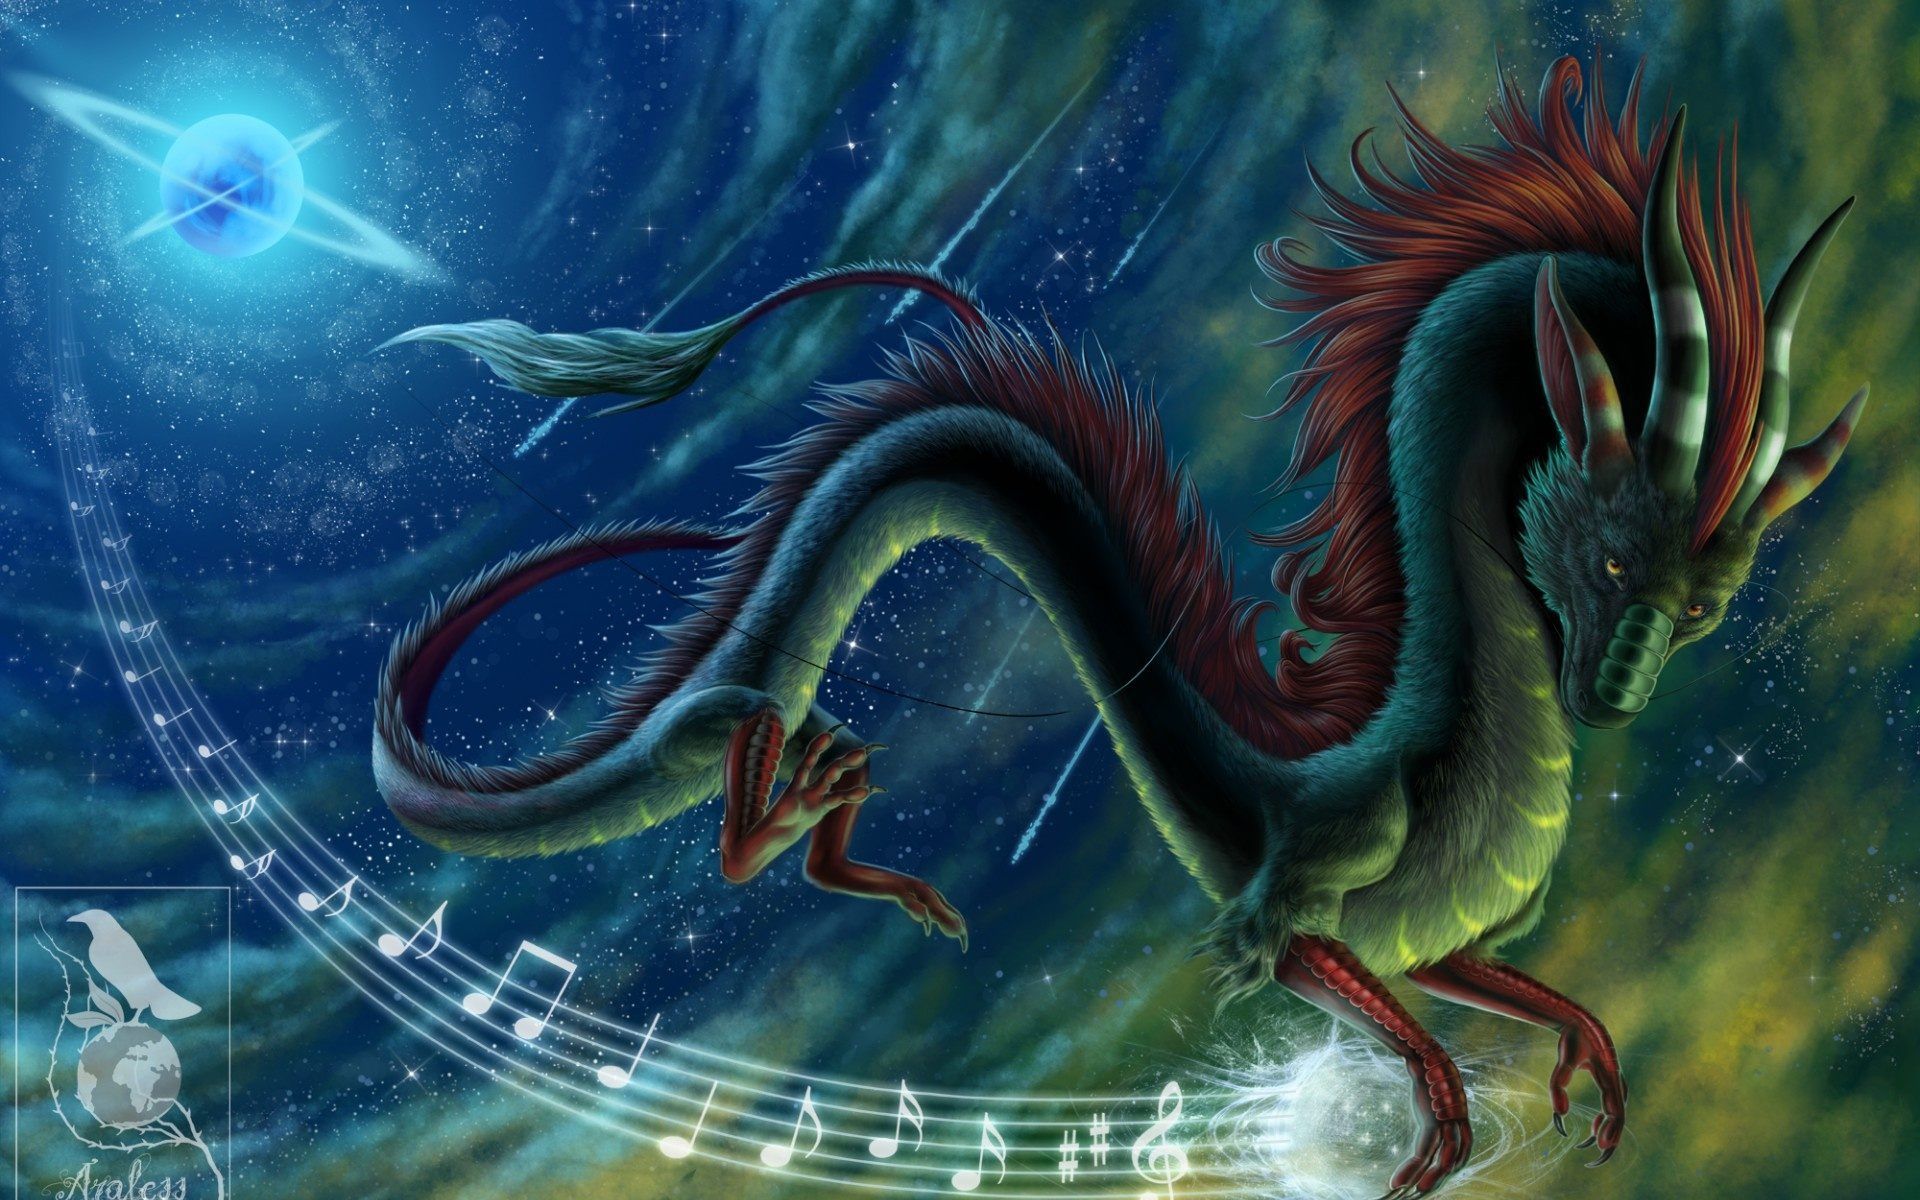 Download wallpaper 800x1280 dragon night art creature fantastic samsung  galaxy note gtn7000 meizu mx2 hd background